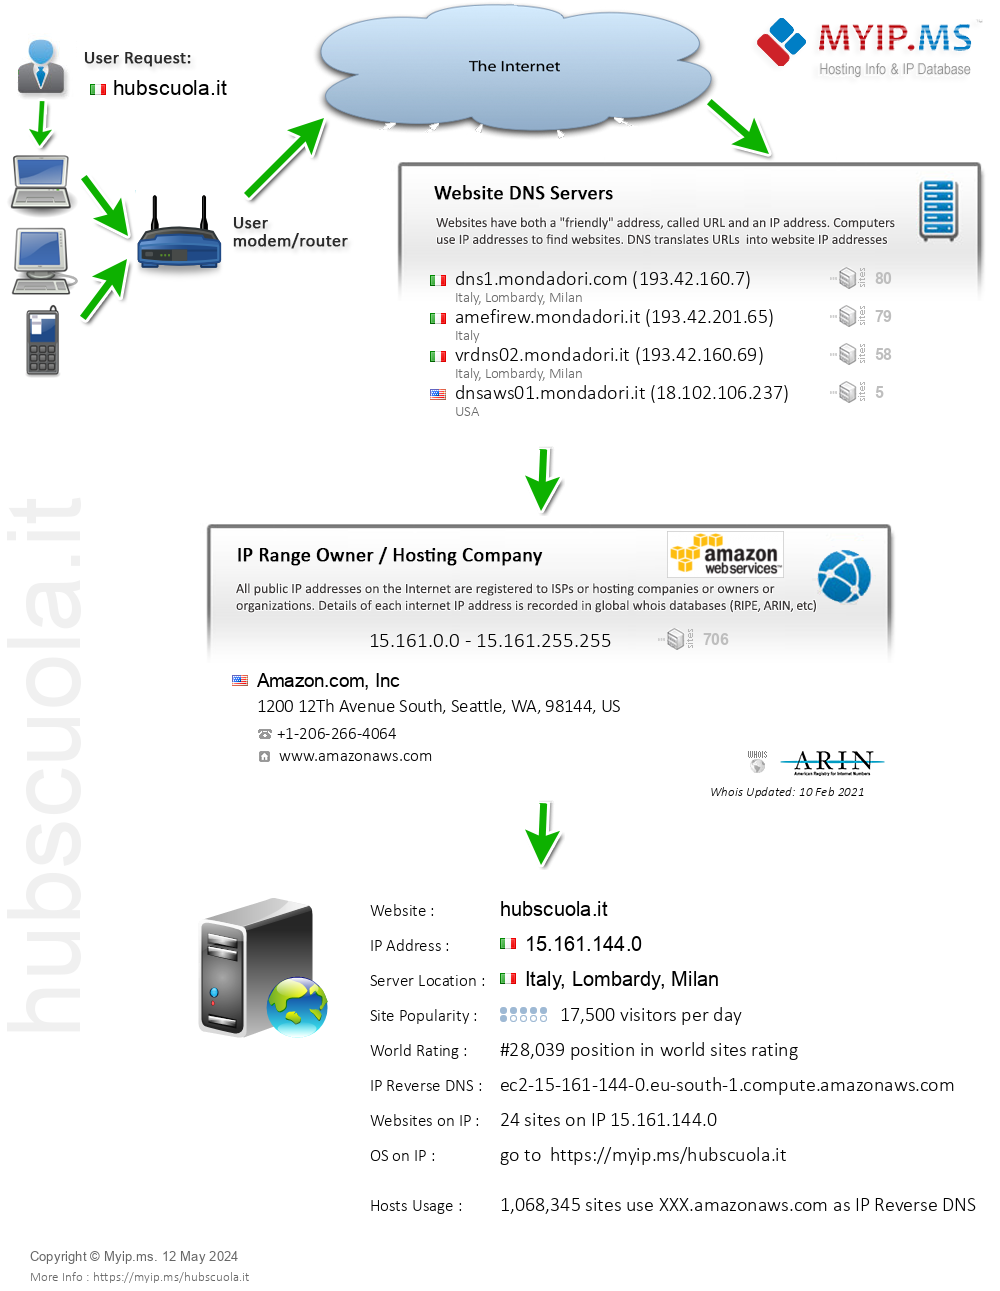 Hubscuola.it - Website Hosting Visual IP Diagram